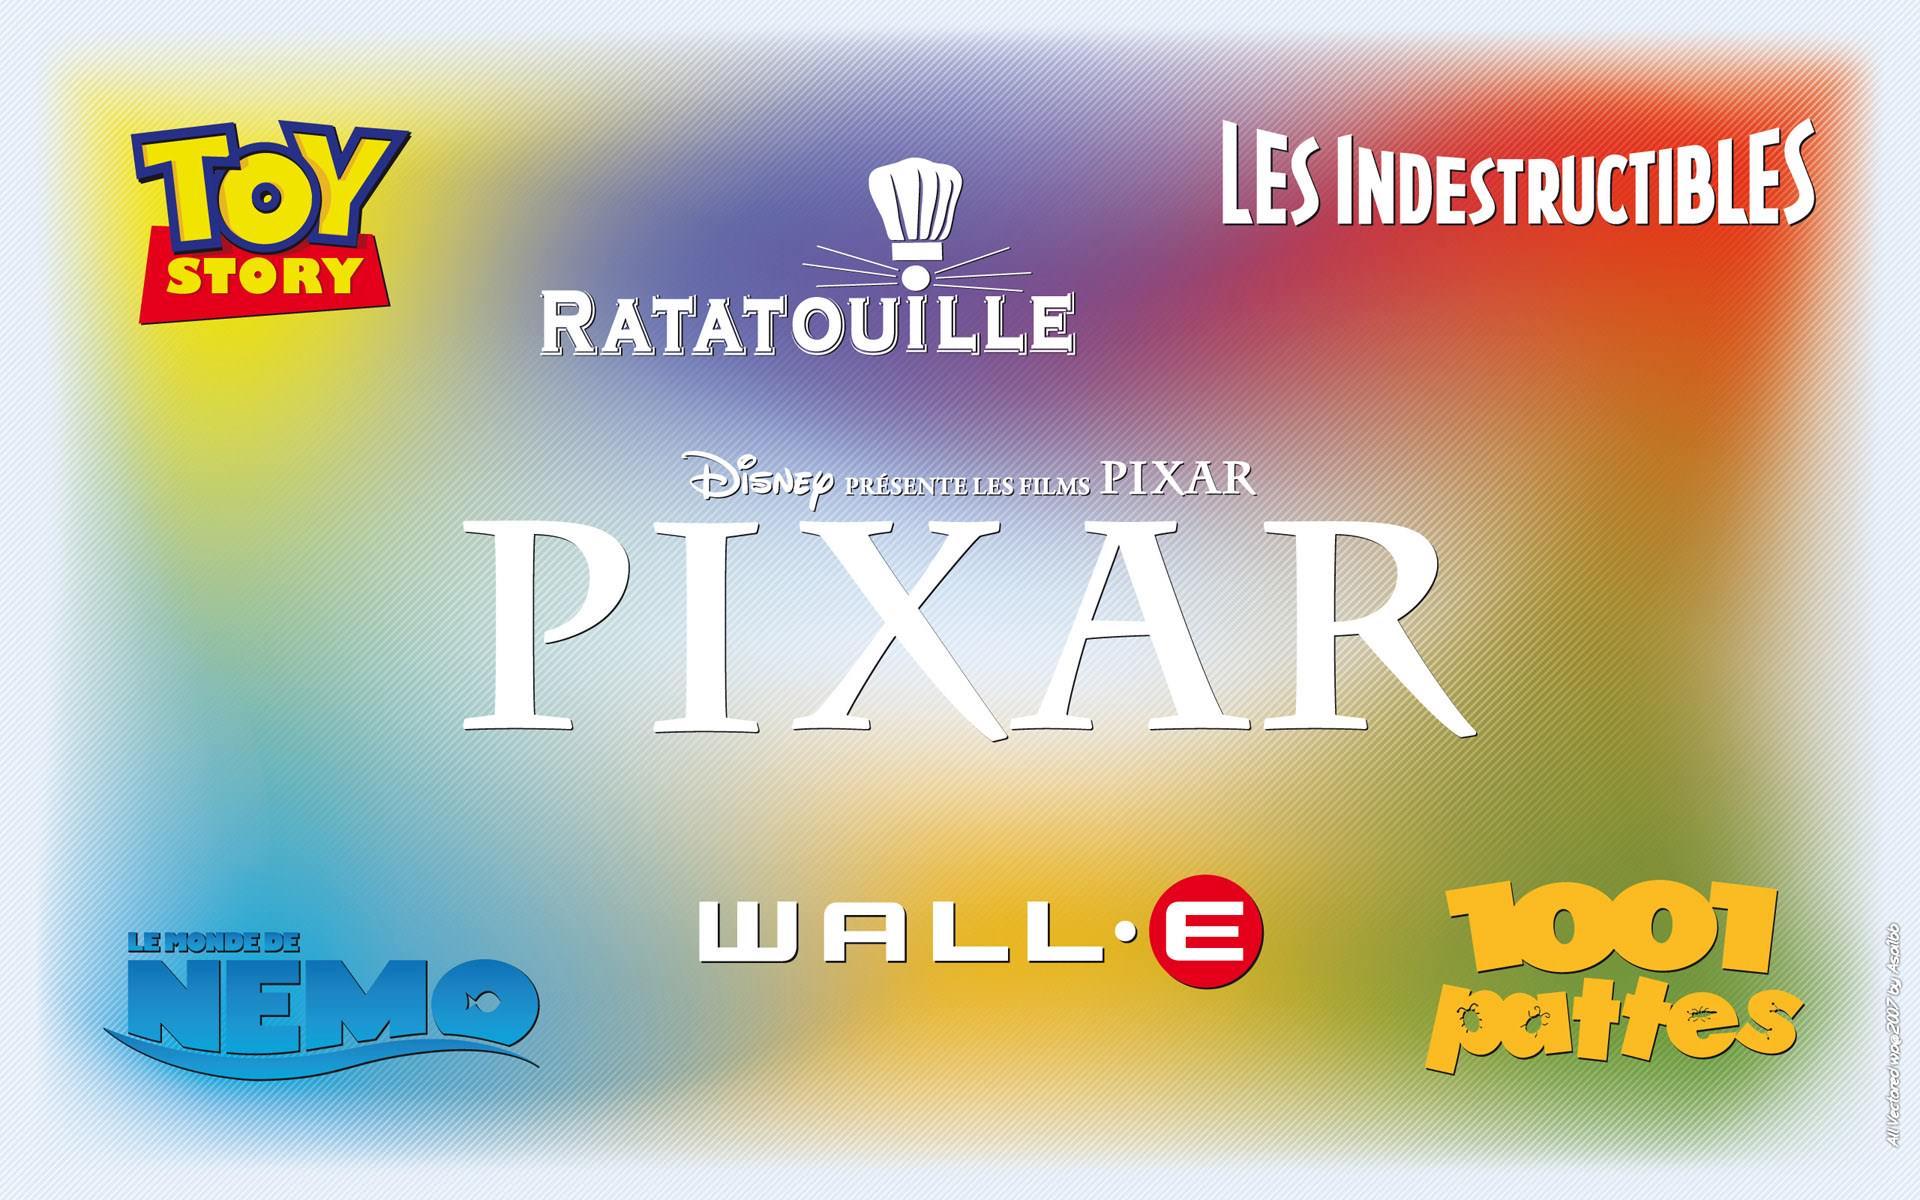 Pixar et Divers courts metrages Pixar collection